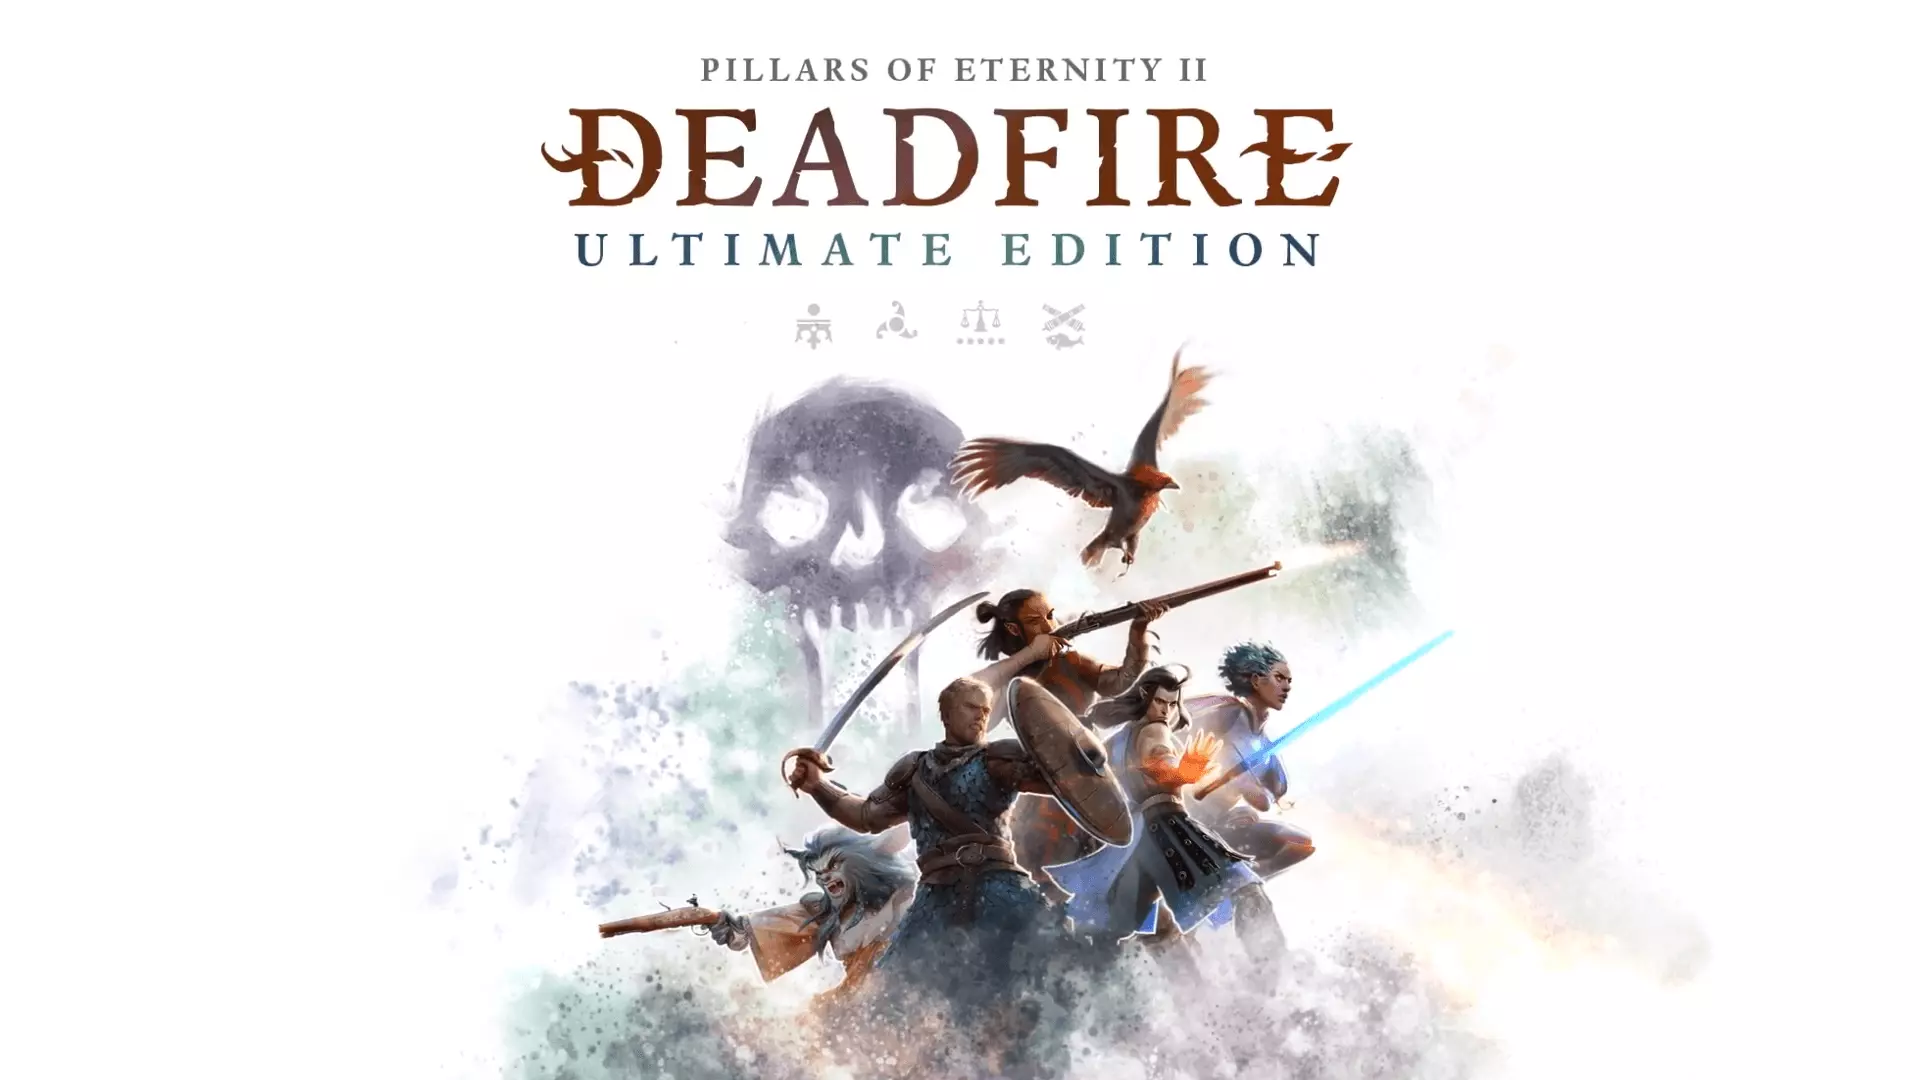 Pillars of Eternity II: Deadfire - ролевая видеоигра, разработанная Obsidian Entertainment и изданная Versus Evil.